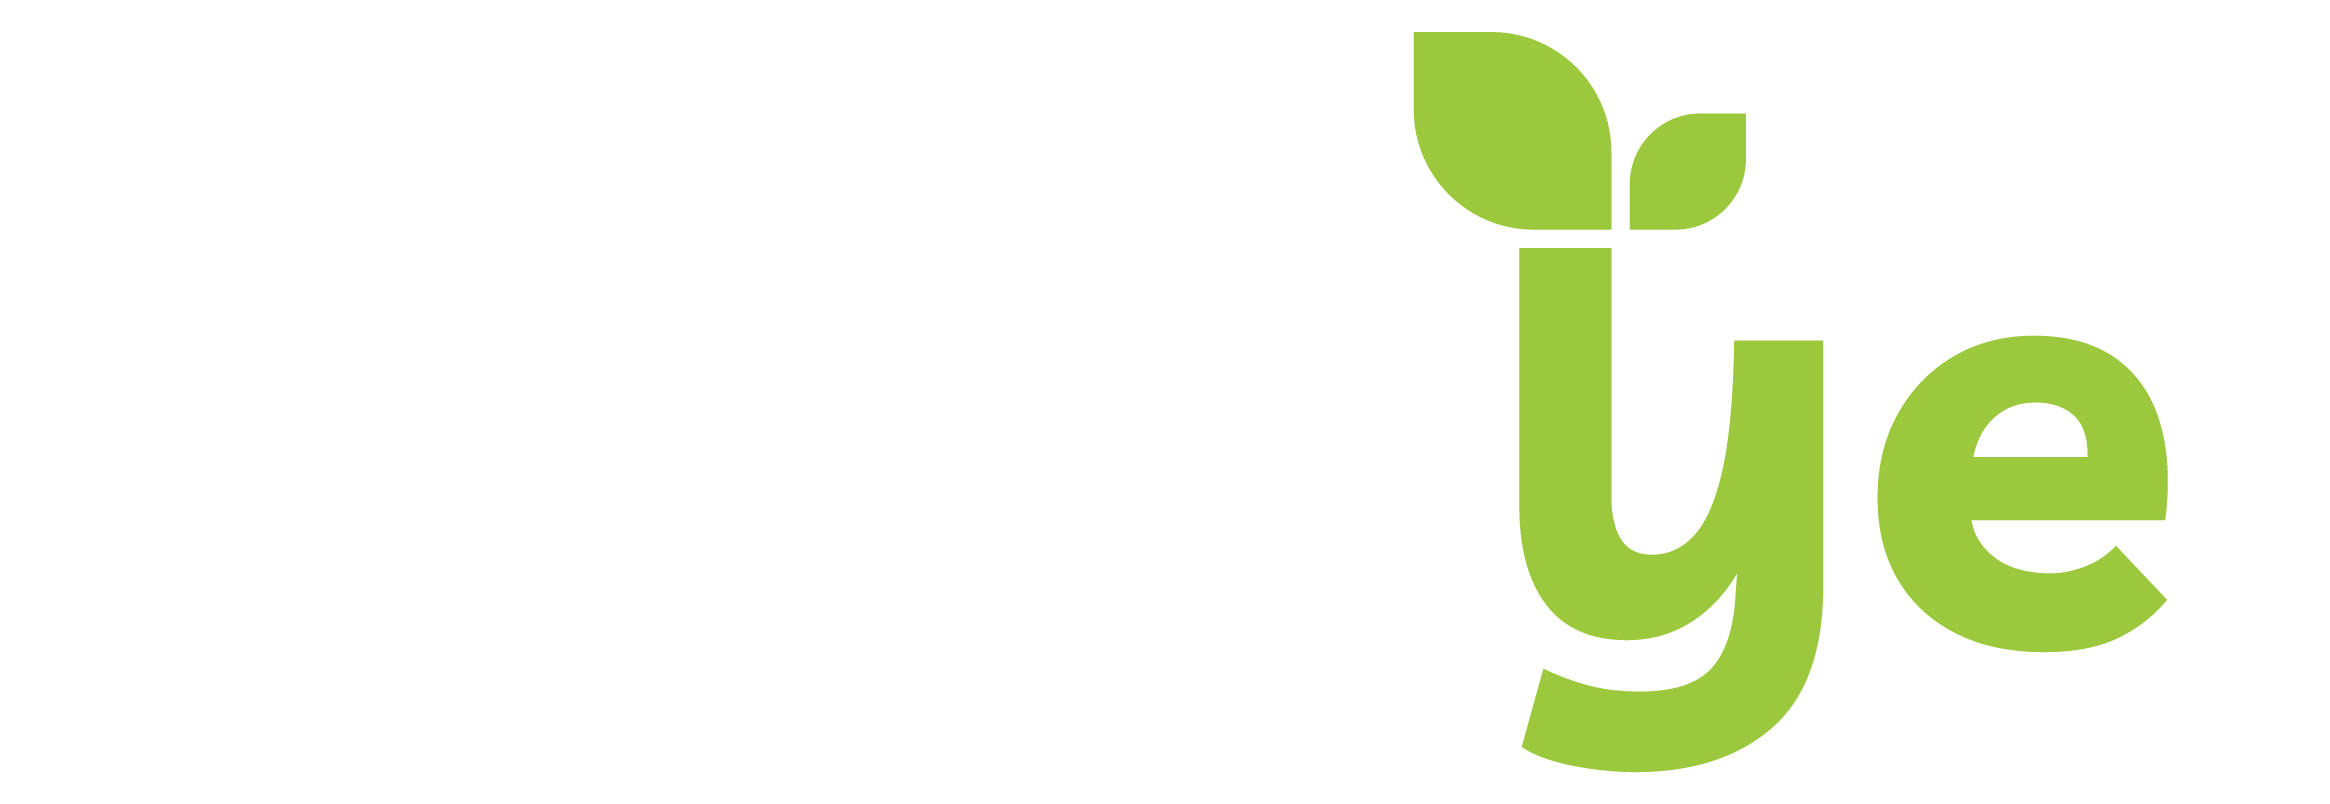 Agroye logo